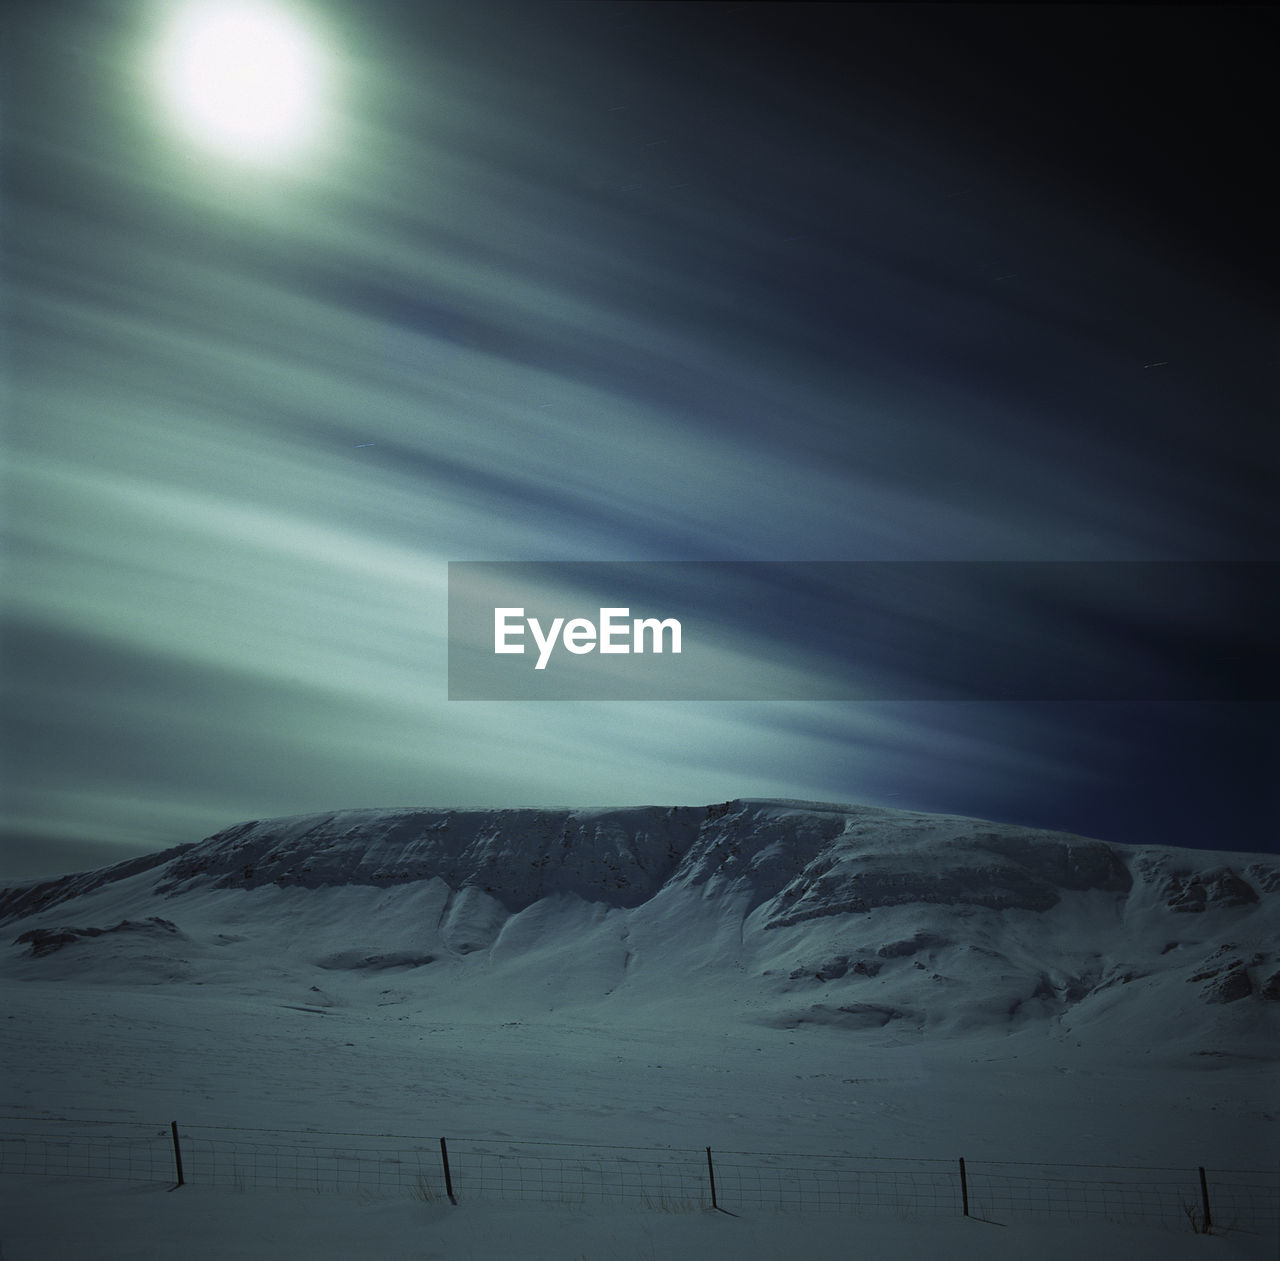 Moonrise over snowy landscape in the icelandic highlands